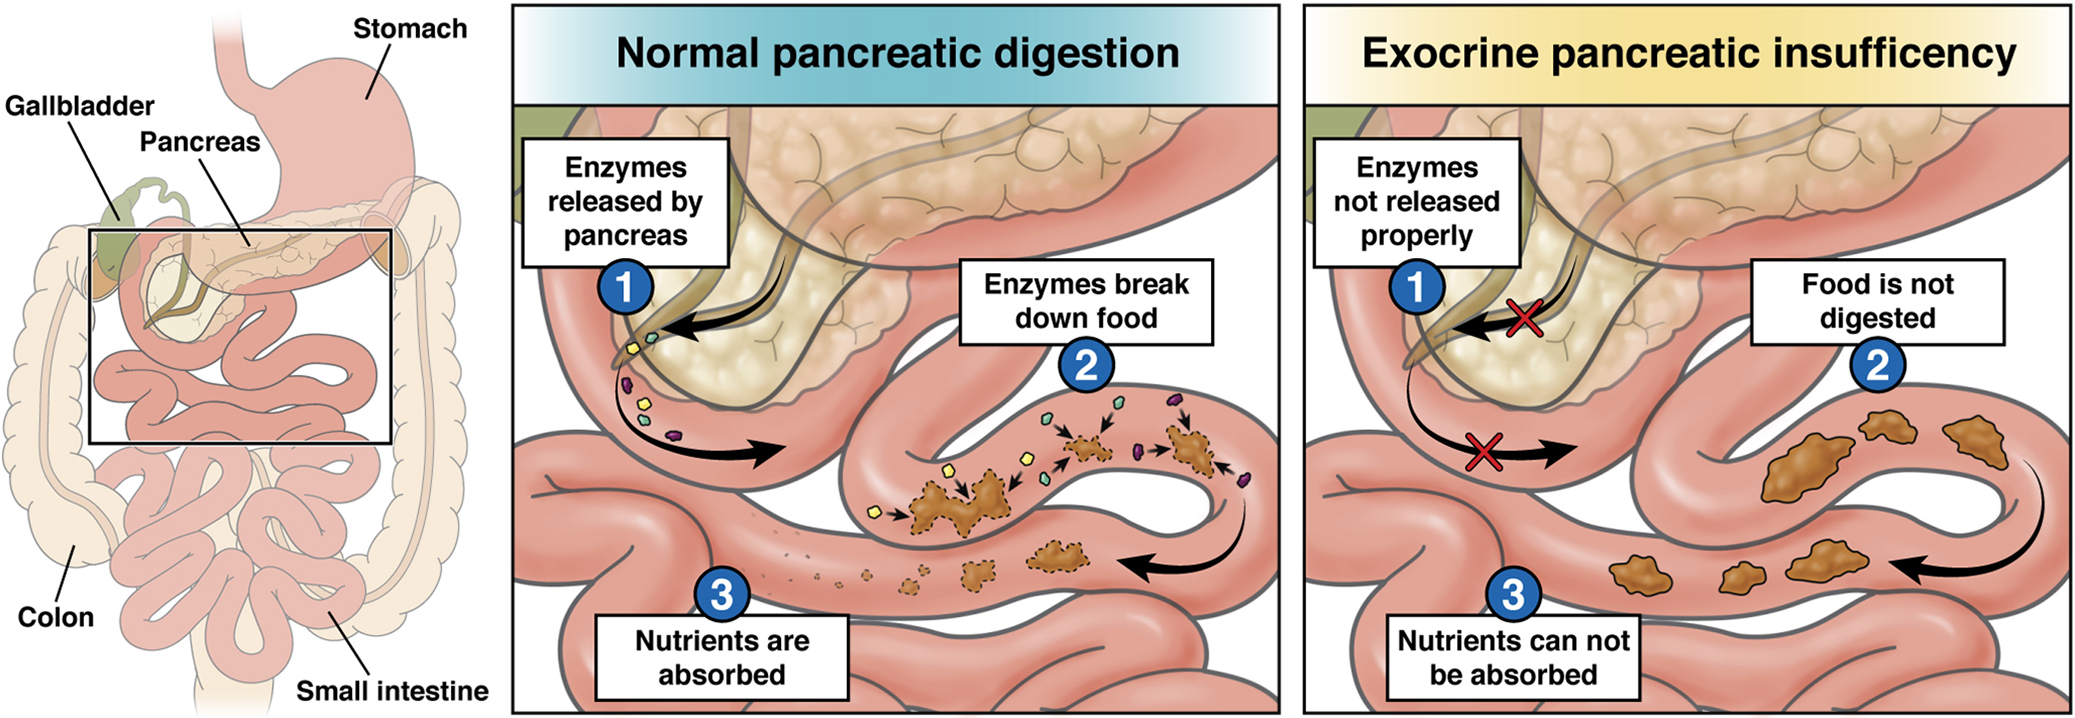 Pancreatic insufficiency symptoms